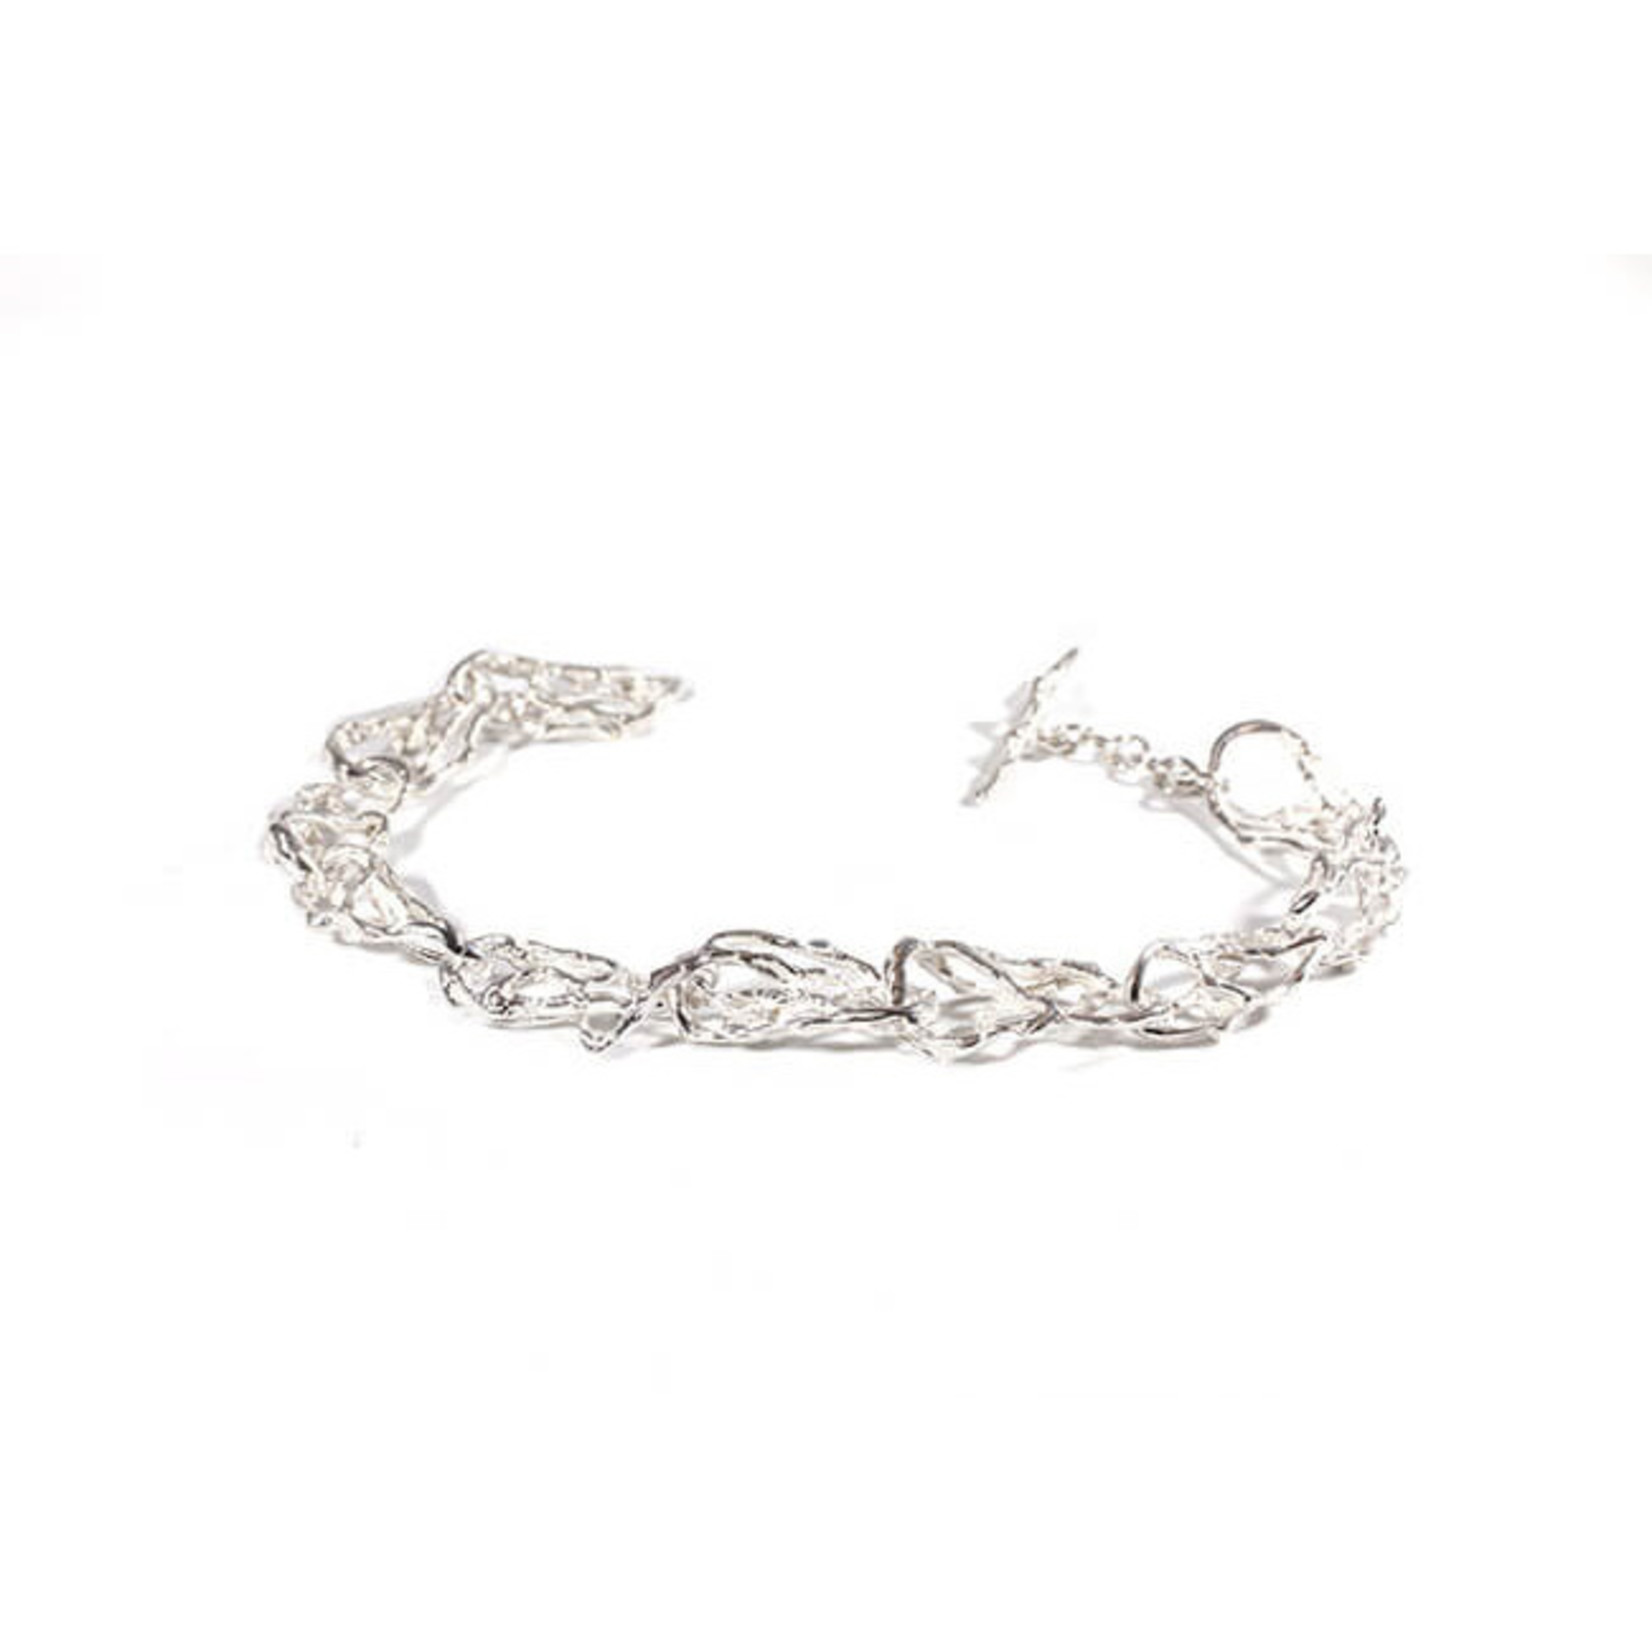 TEGO Liquid silver bracelet